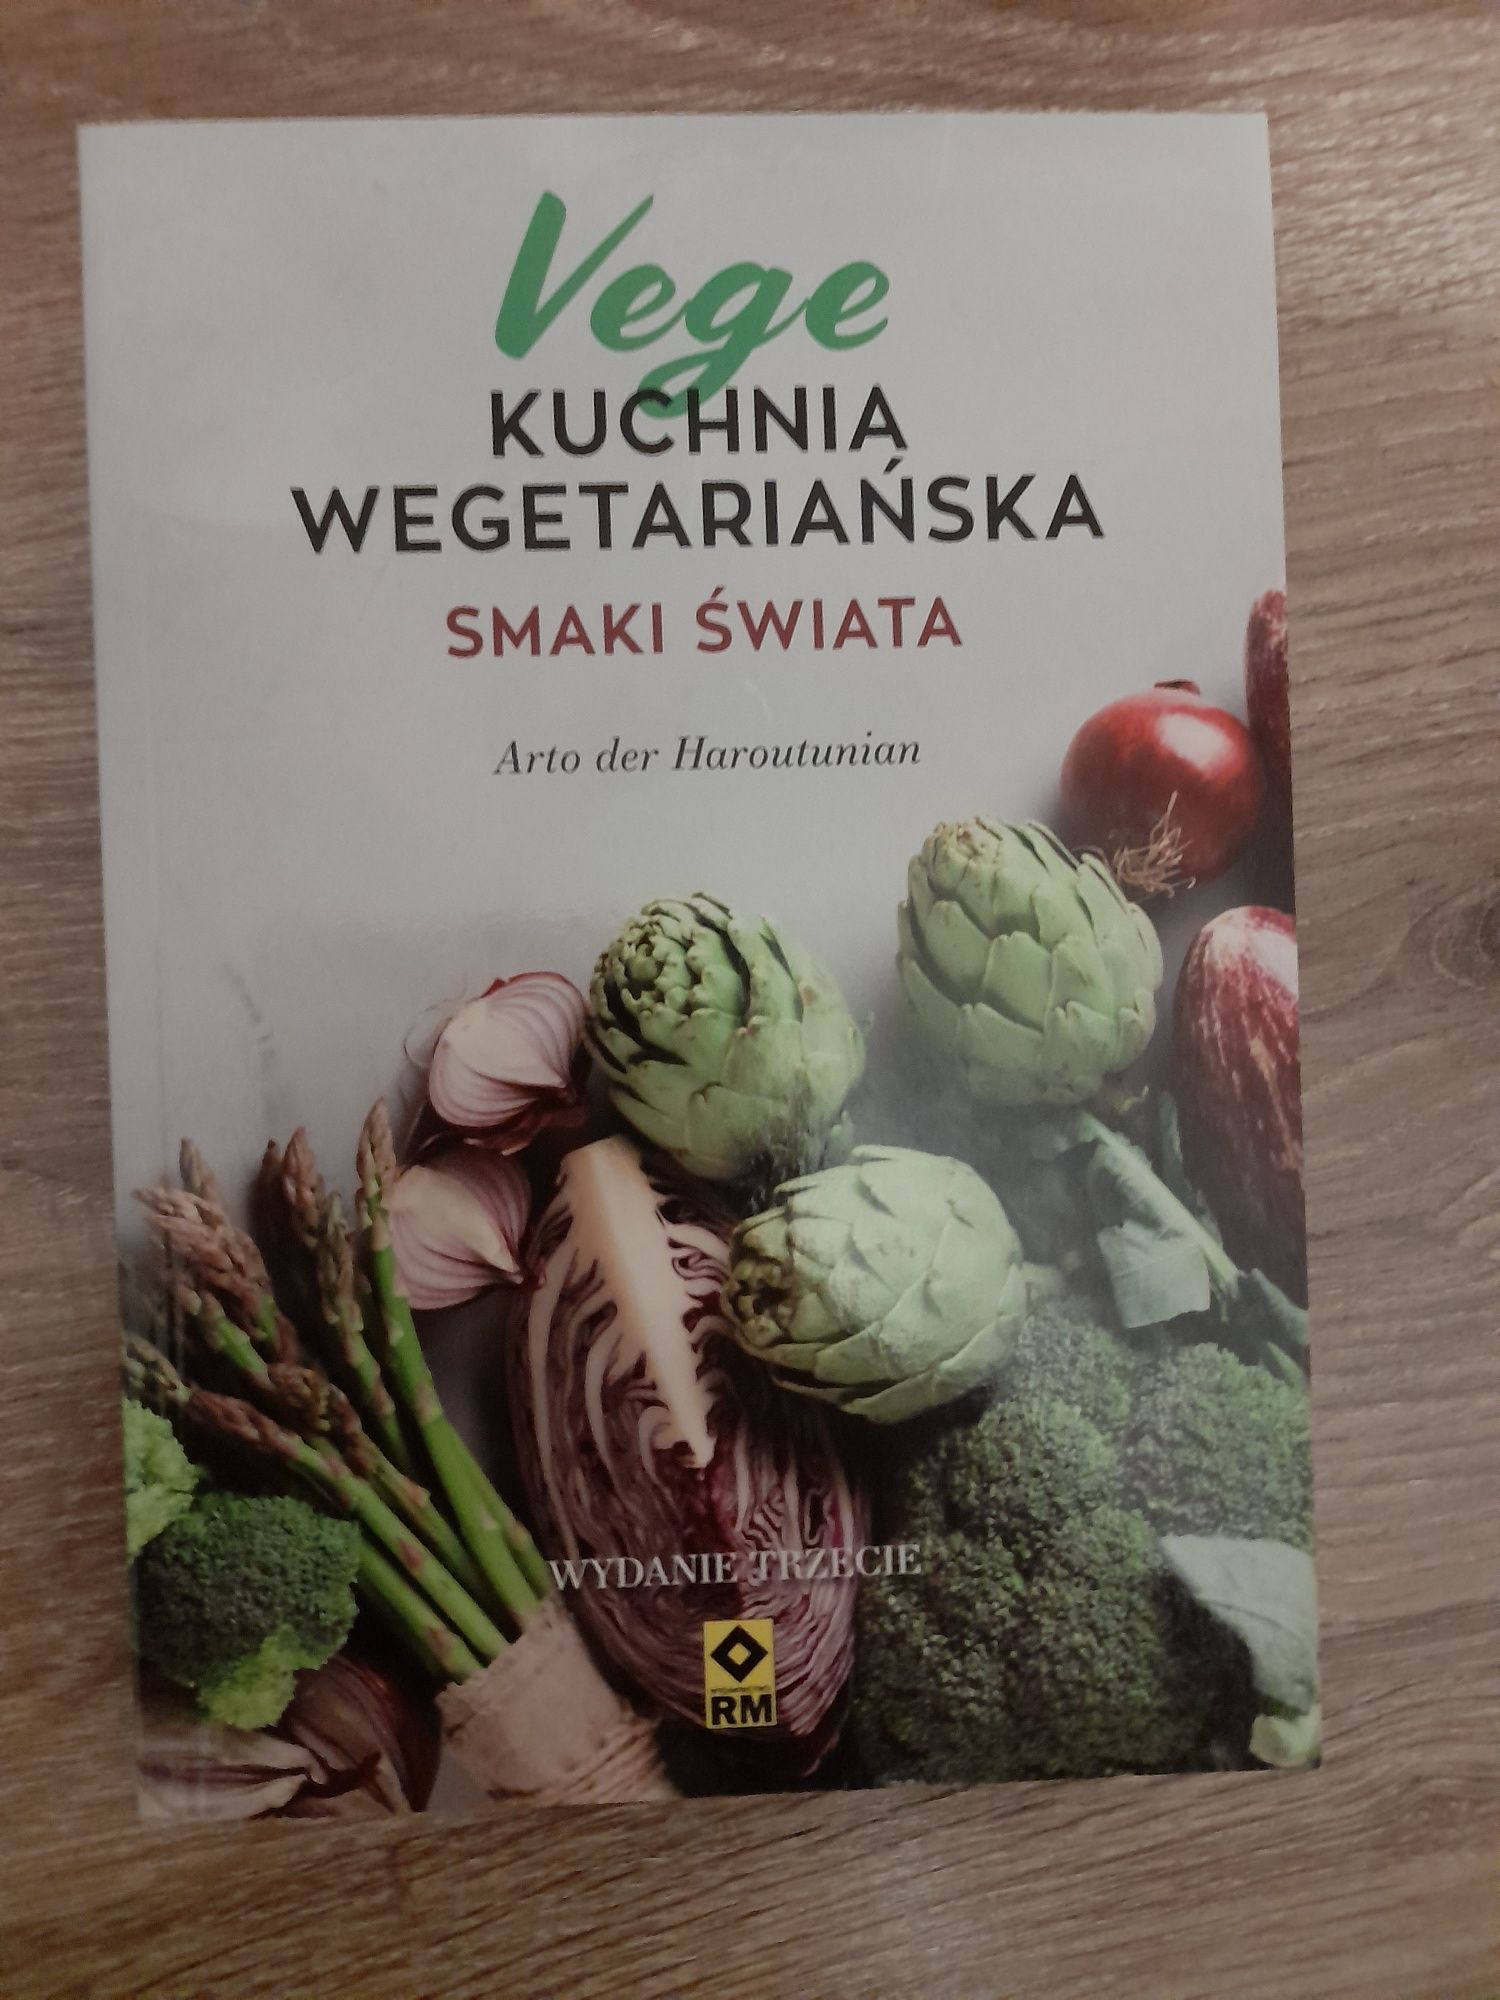 Arto der Haroutunian, Kuchnia wegetariańska. Smaki świata.